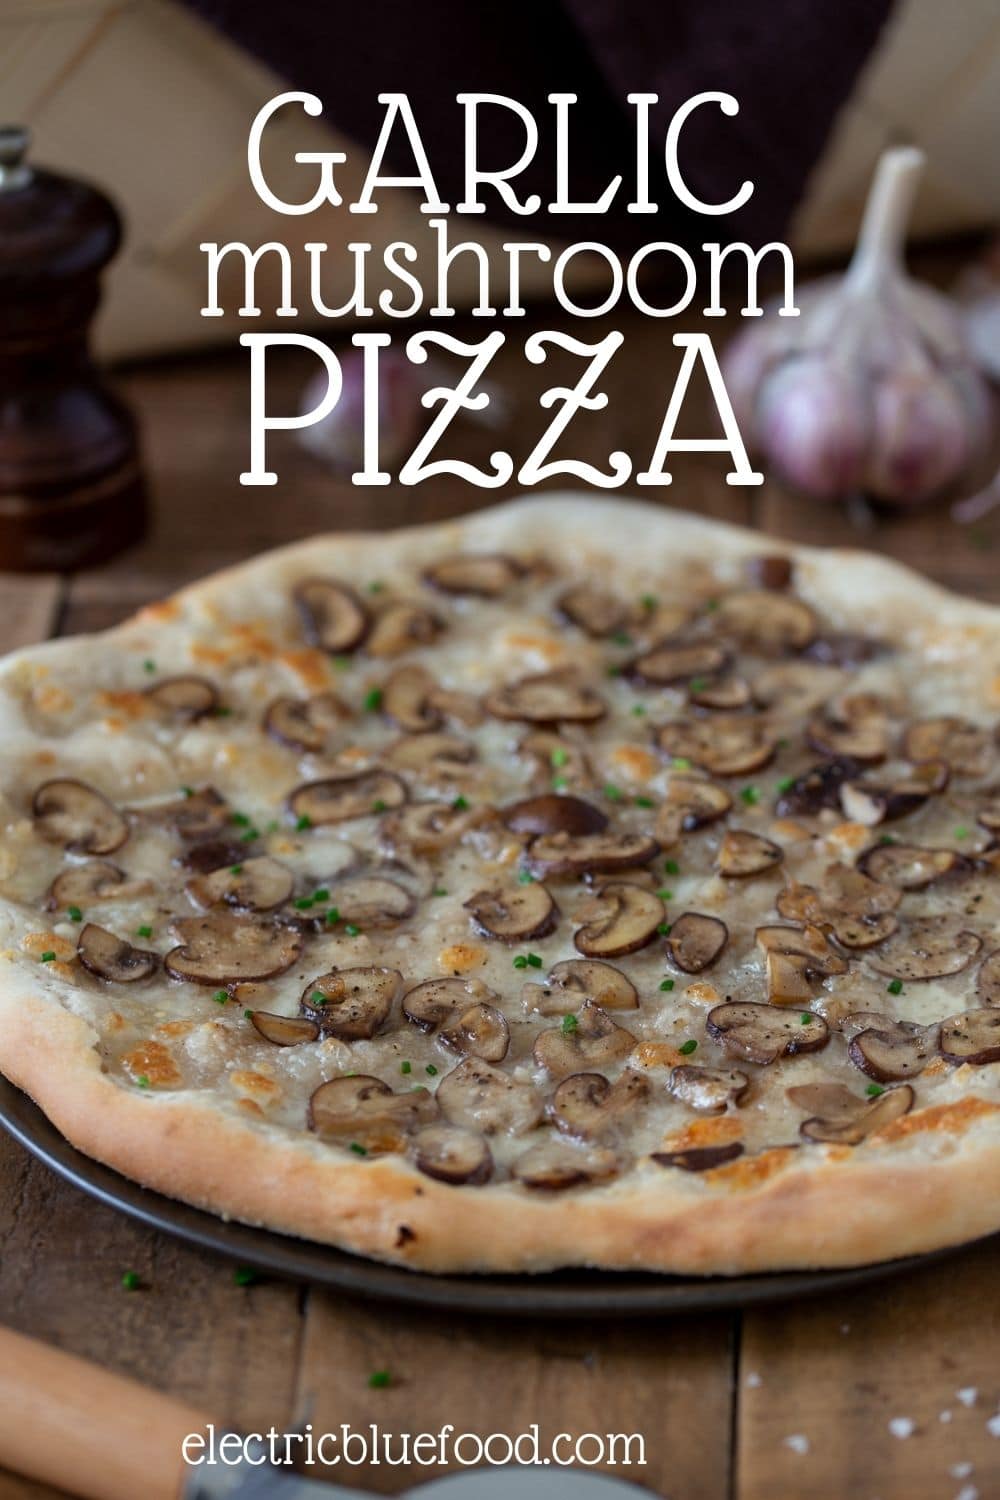 Garlic mushroom pizza bianca topped with mozzarella and garlic mushrooms sautéed in butter.